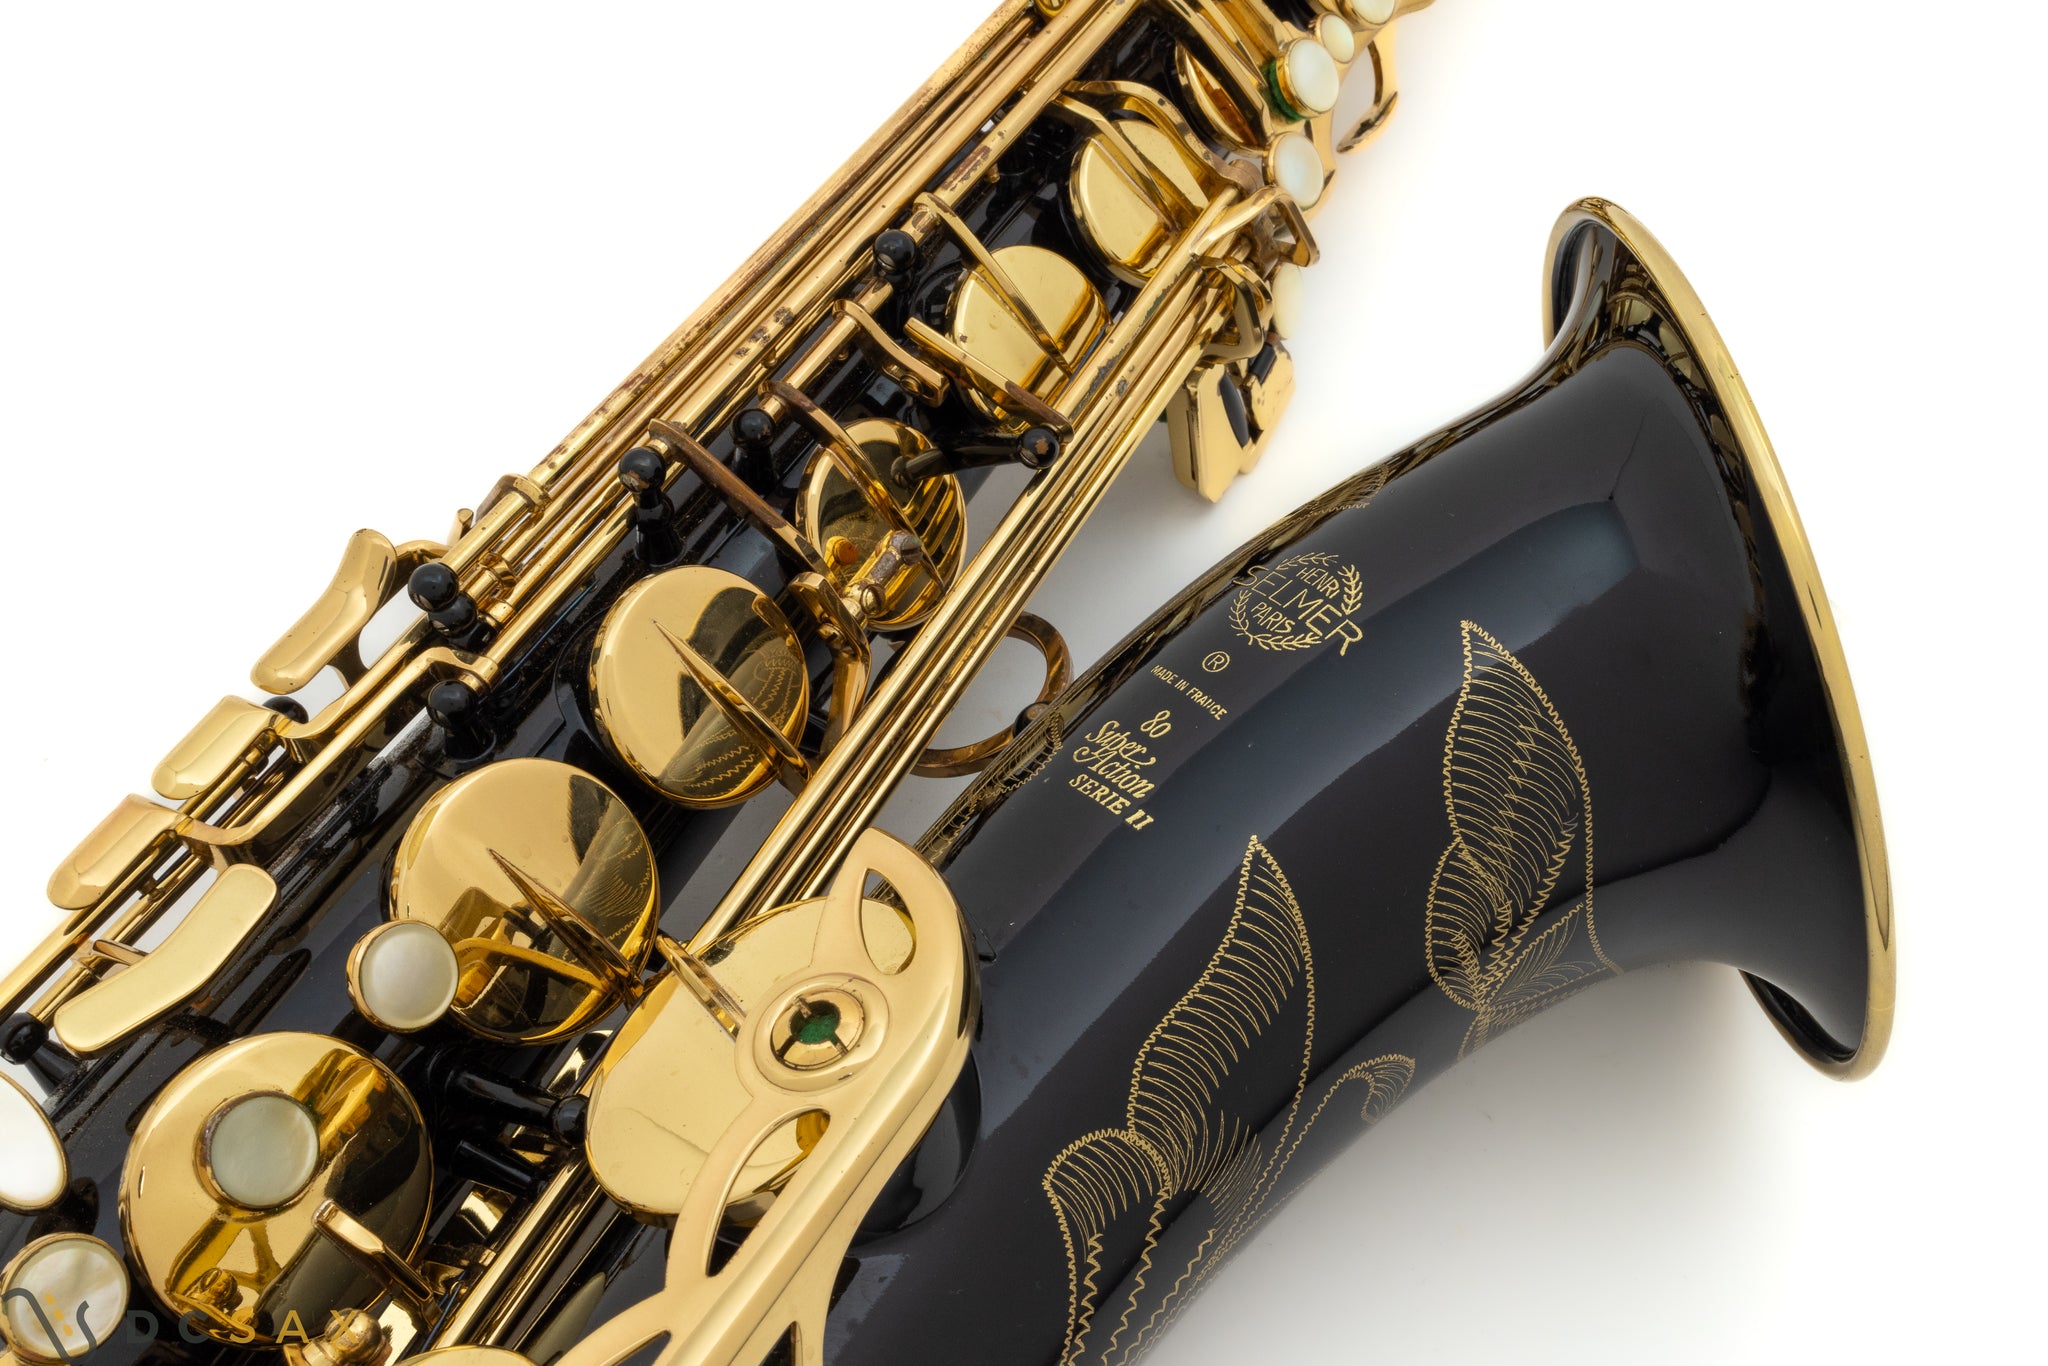 Selmer Series II Tenor Saxophone, Black Lacquer, Just Serviced